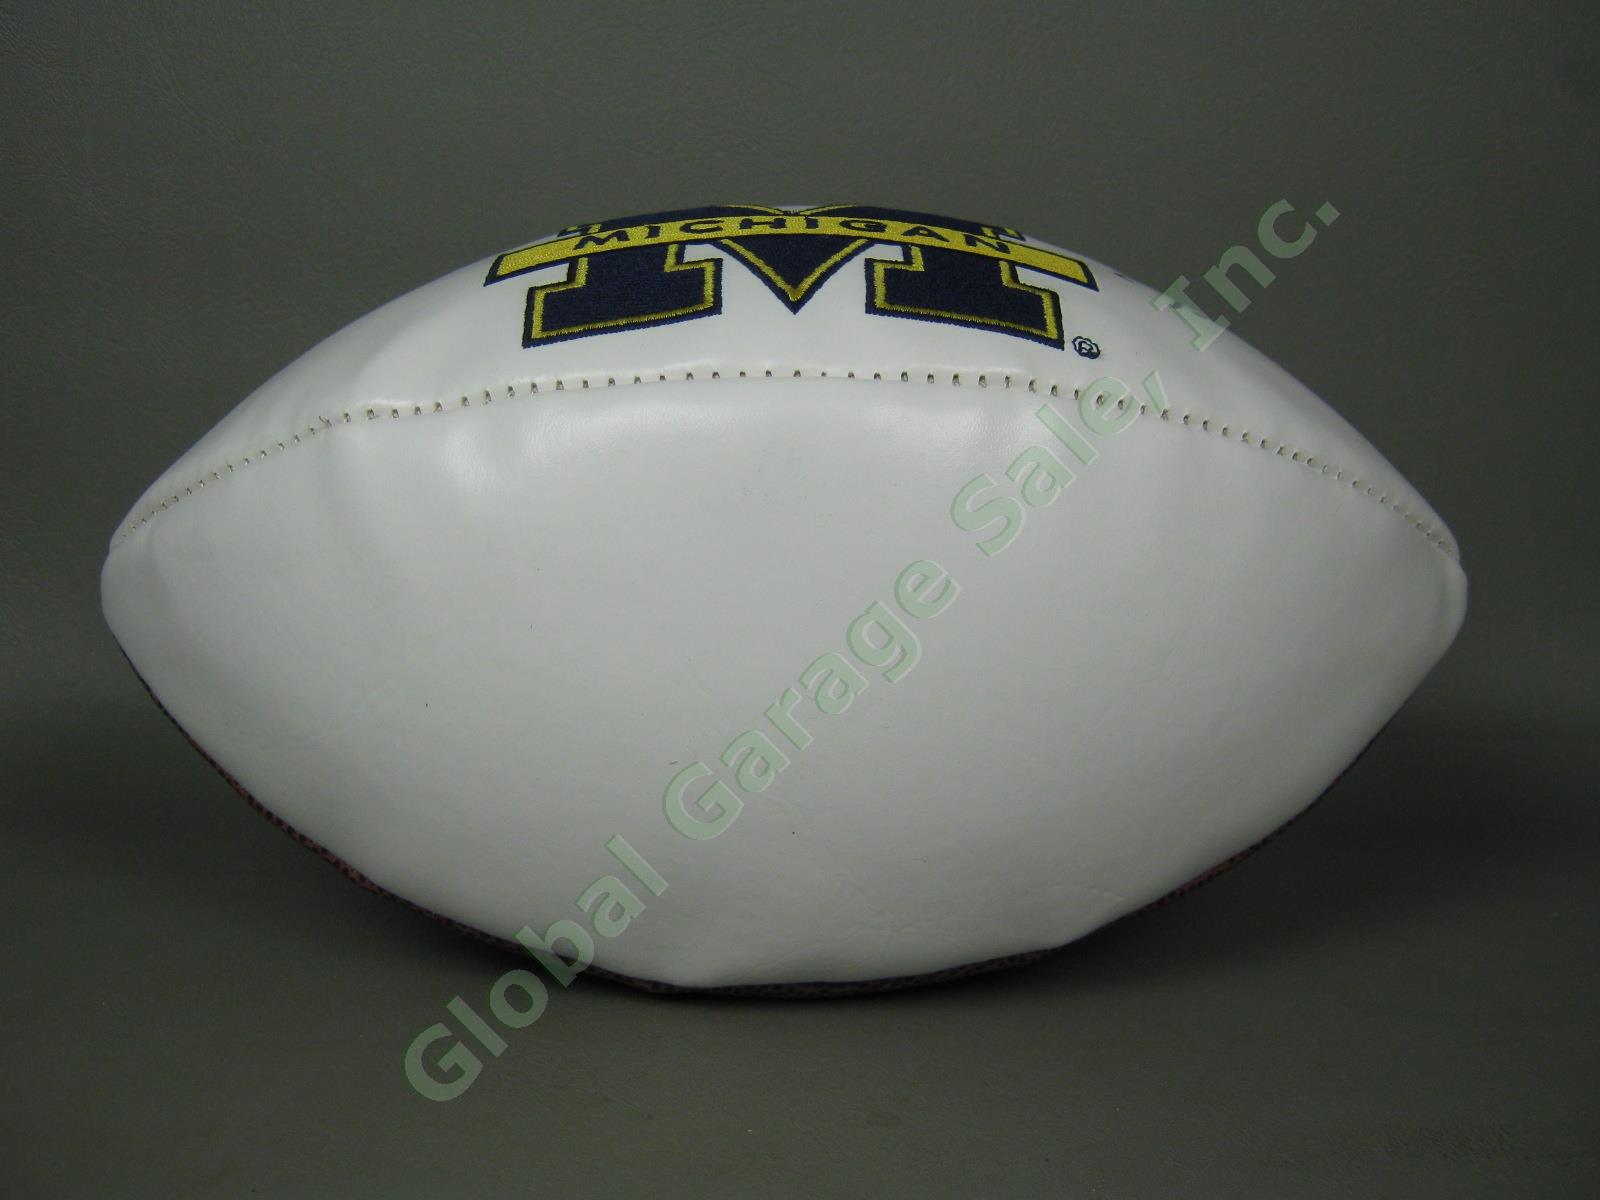 Tom Brady Hand Signed Michigan Wolverines Full Size Football NE Patriots NO RES! 5